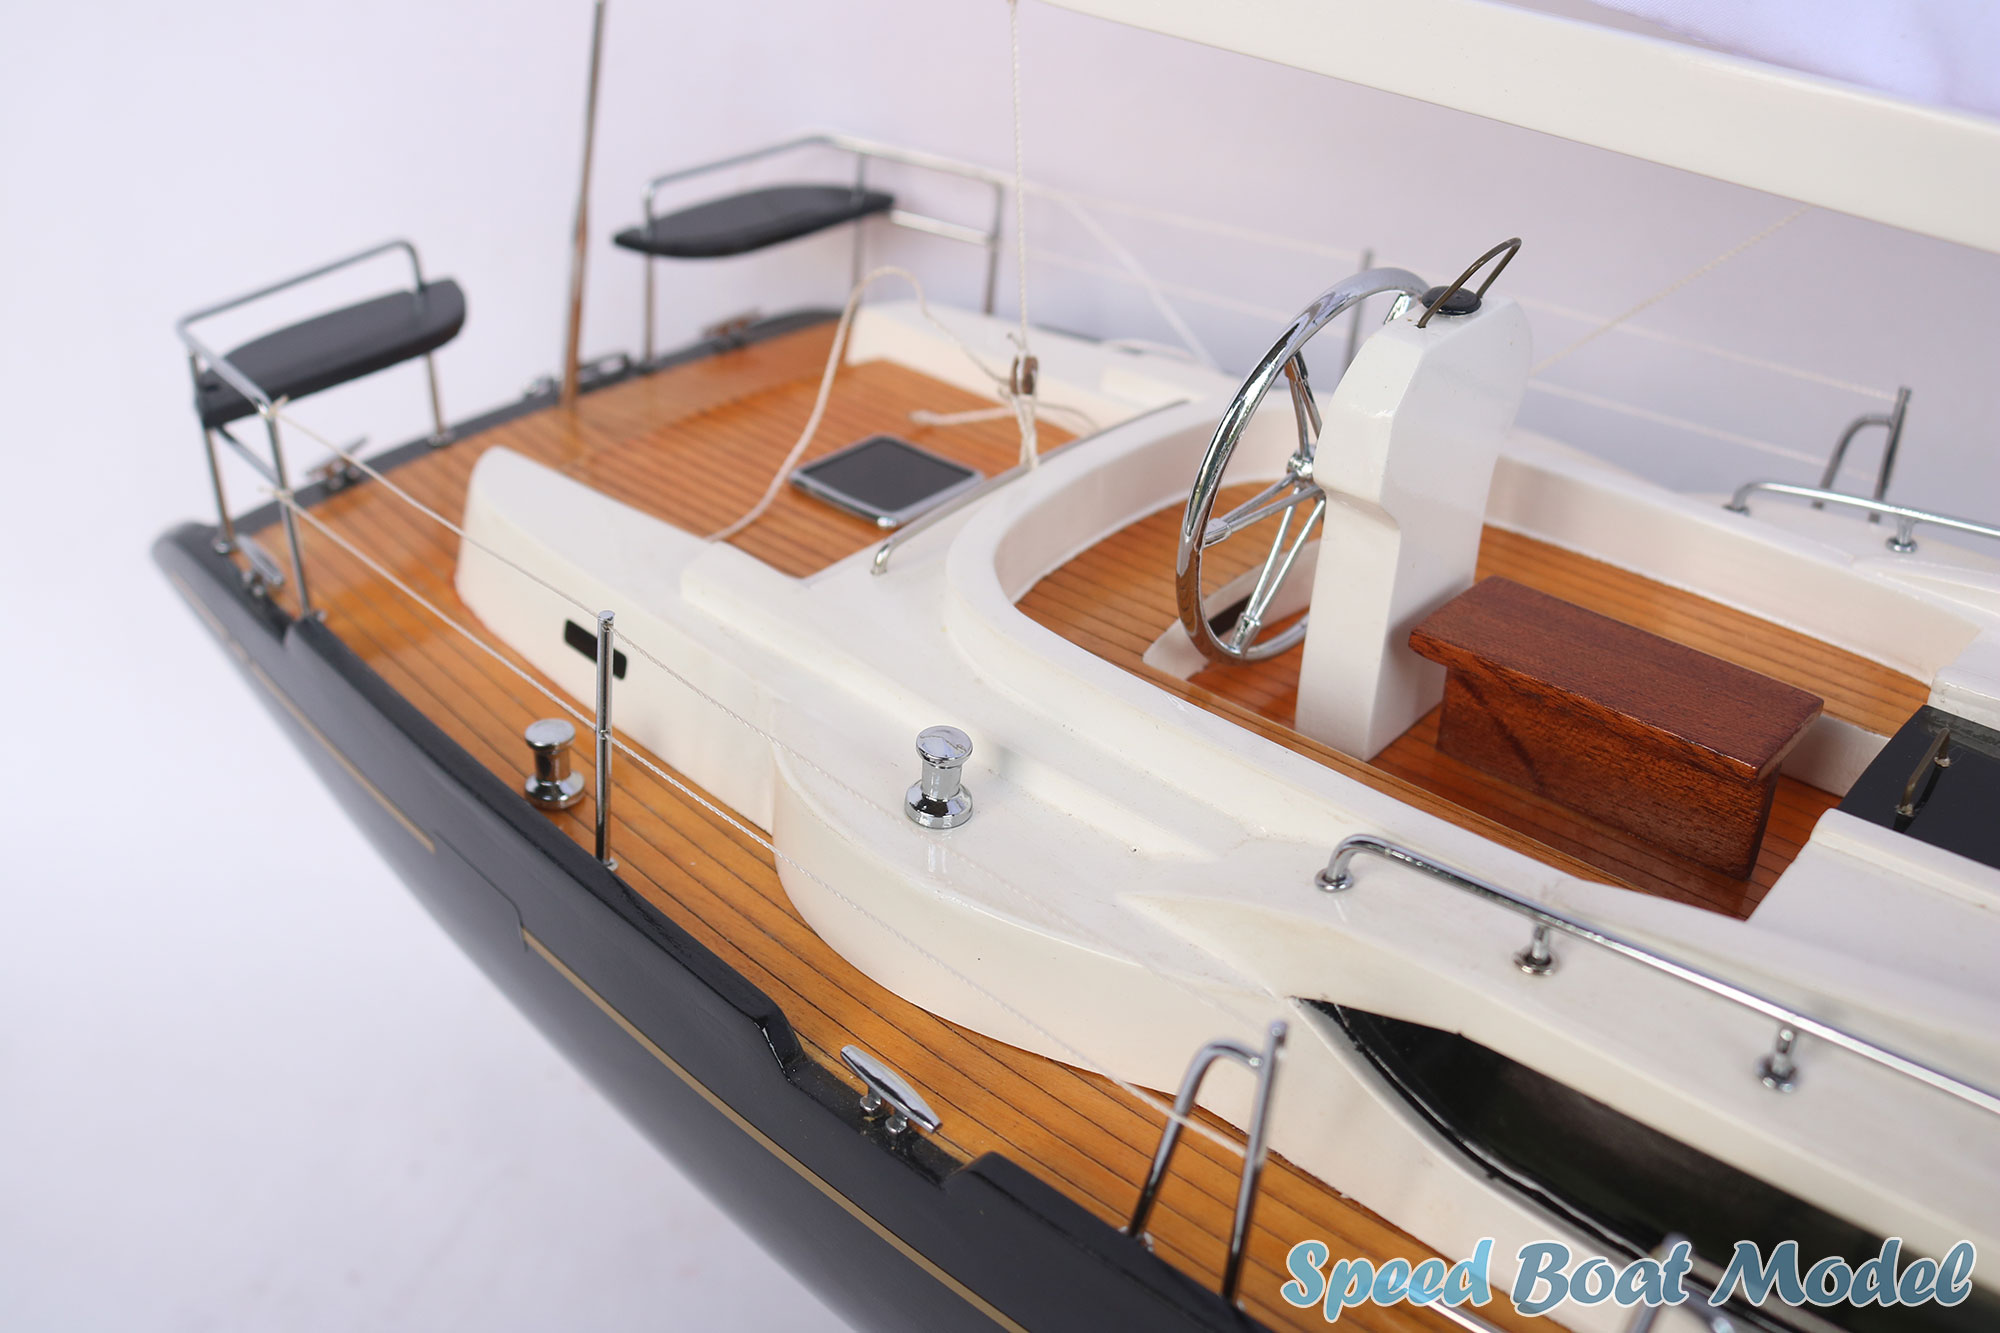 Oyster 54 Sailing Boat Model 32.2"